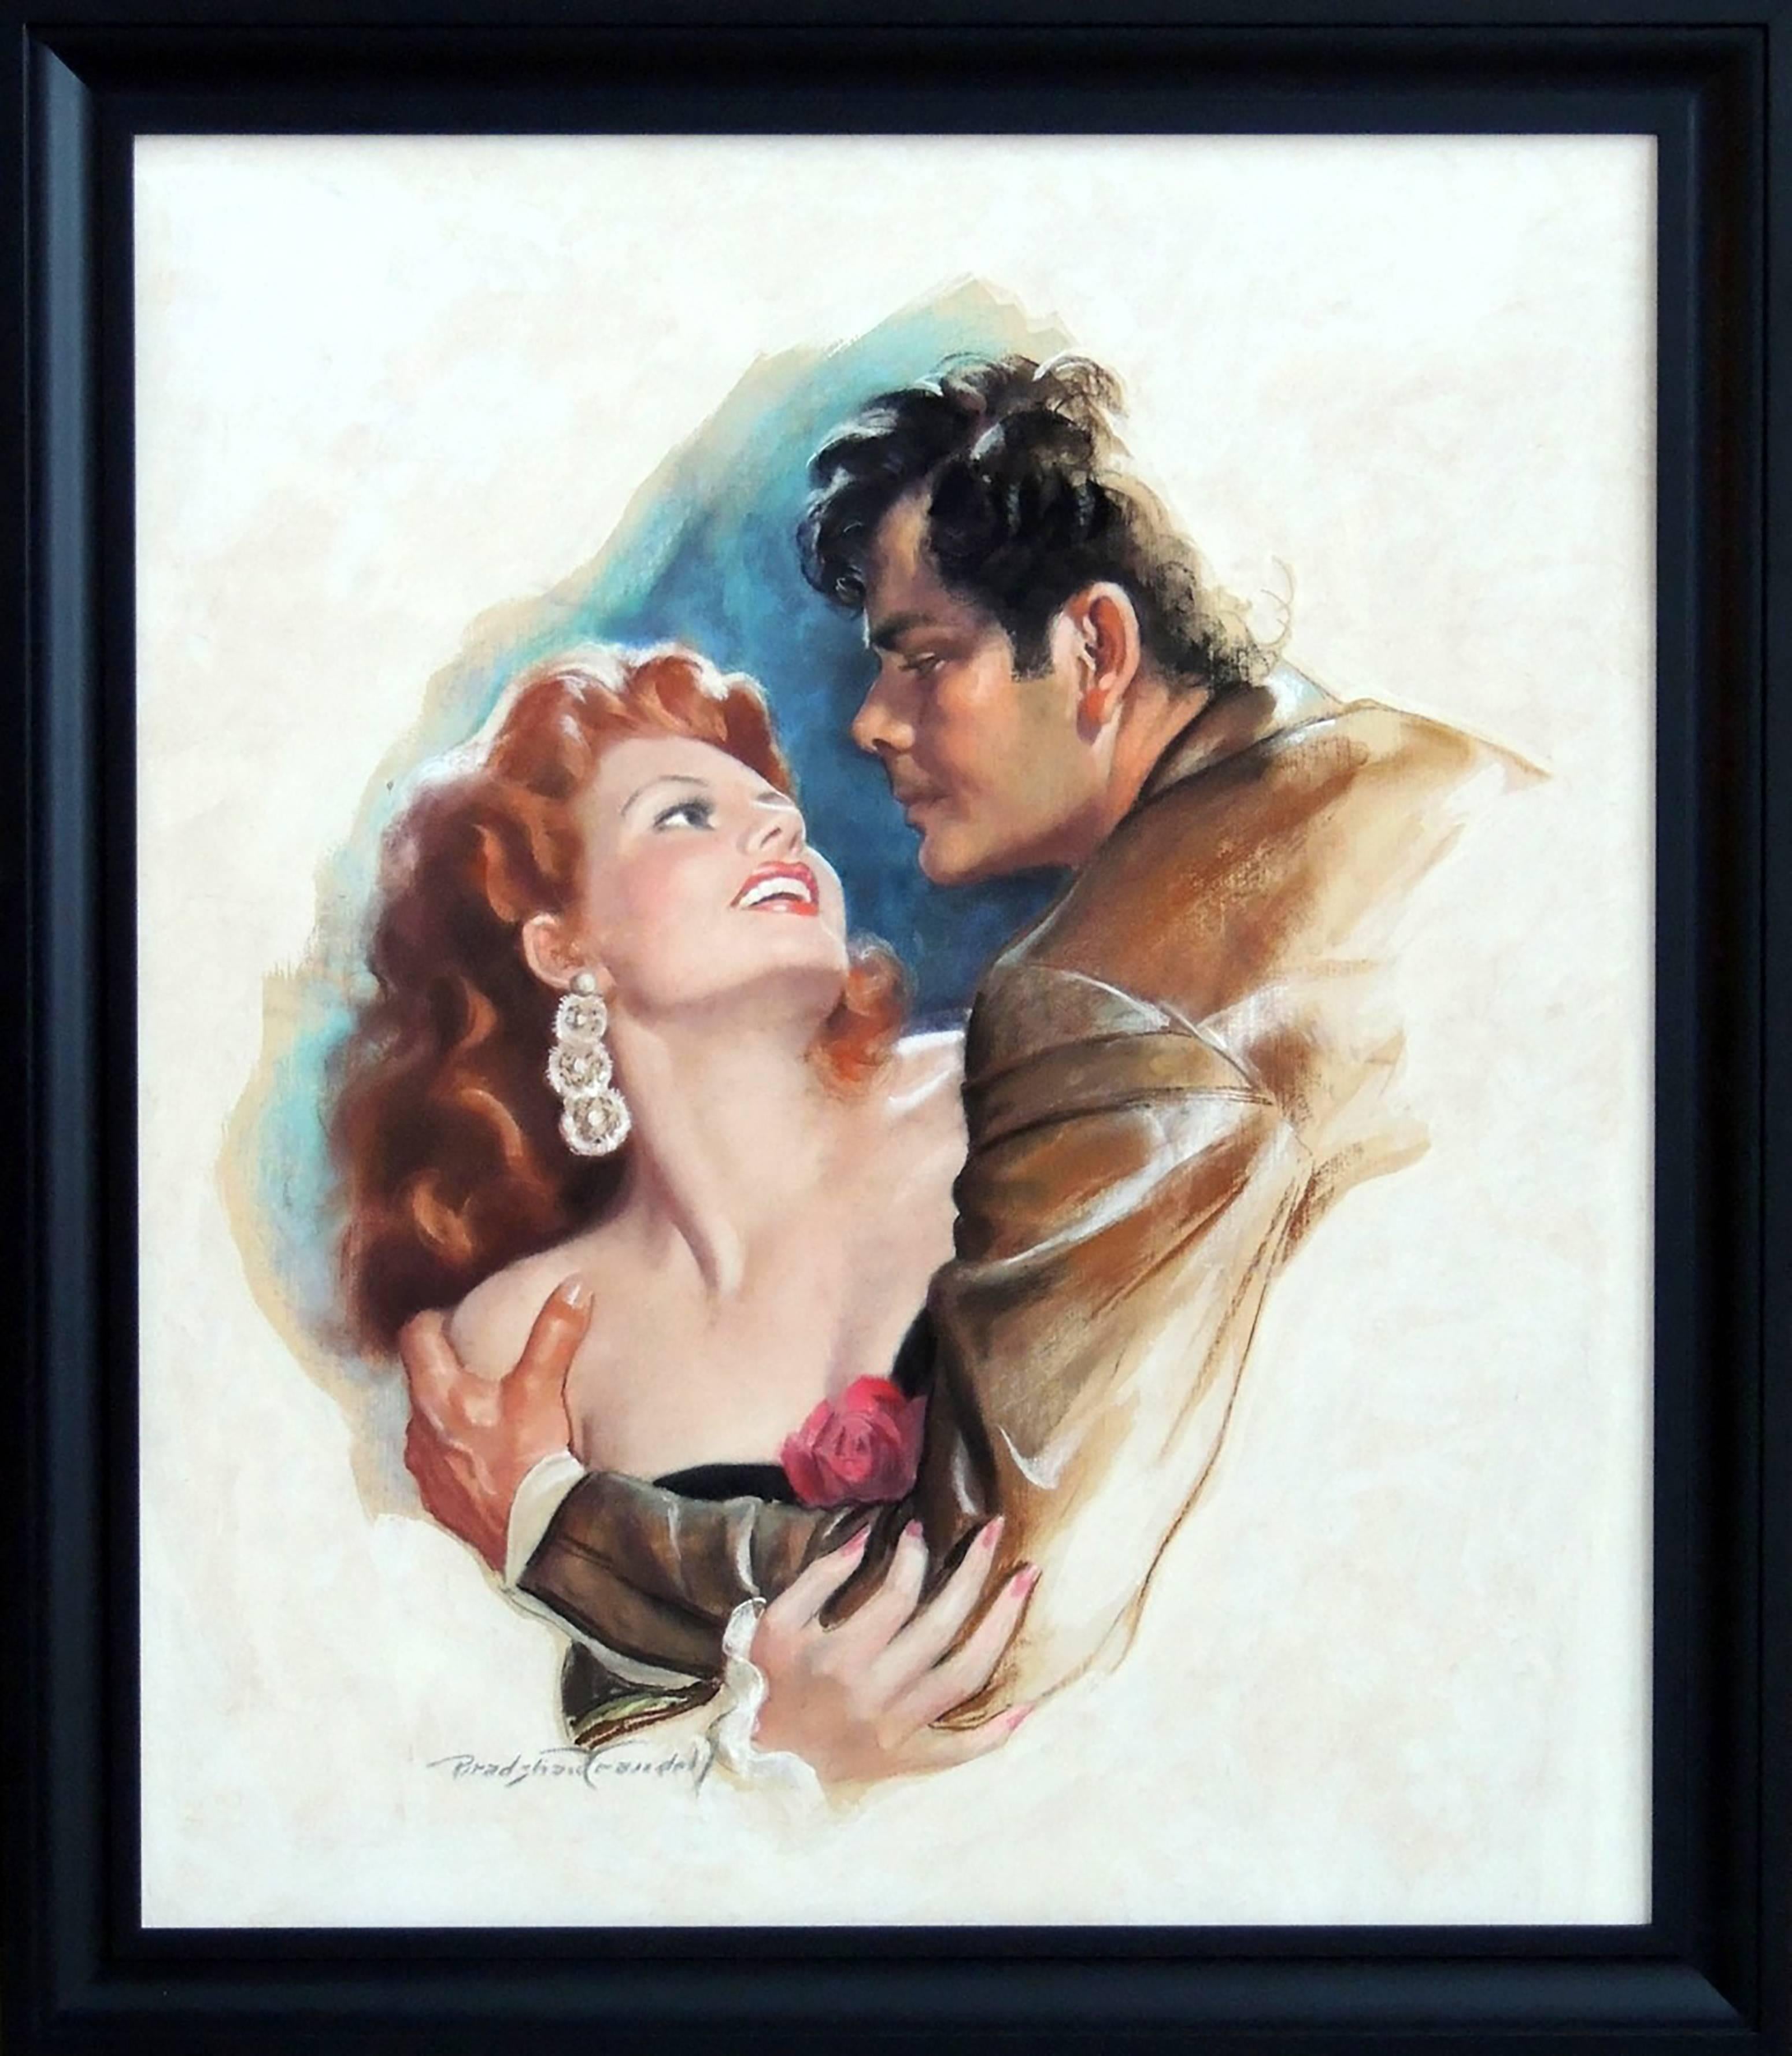 Rita Hayworth & Glen Ford, Movie Poster Illustration - Art by Bradshaw Crandell